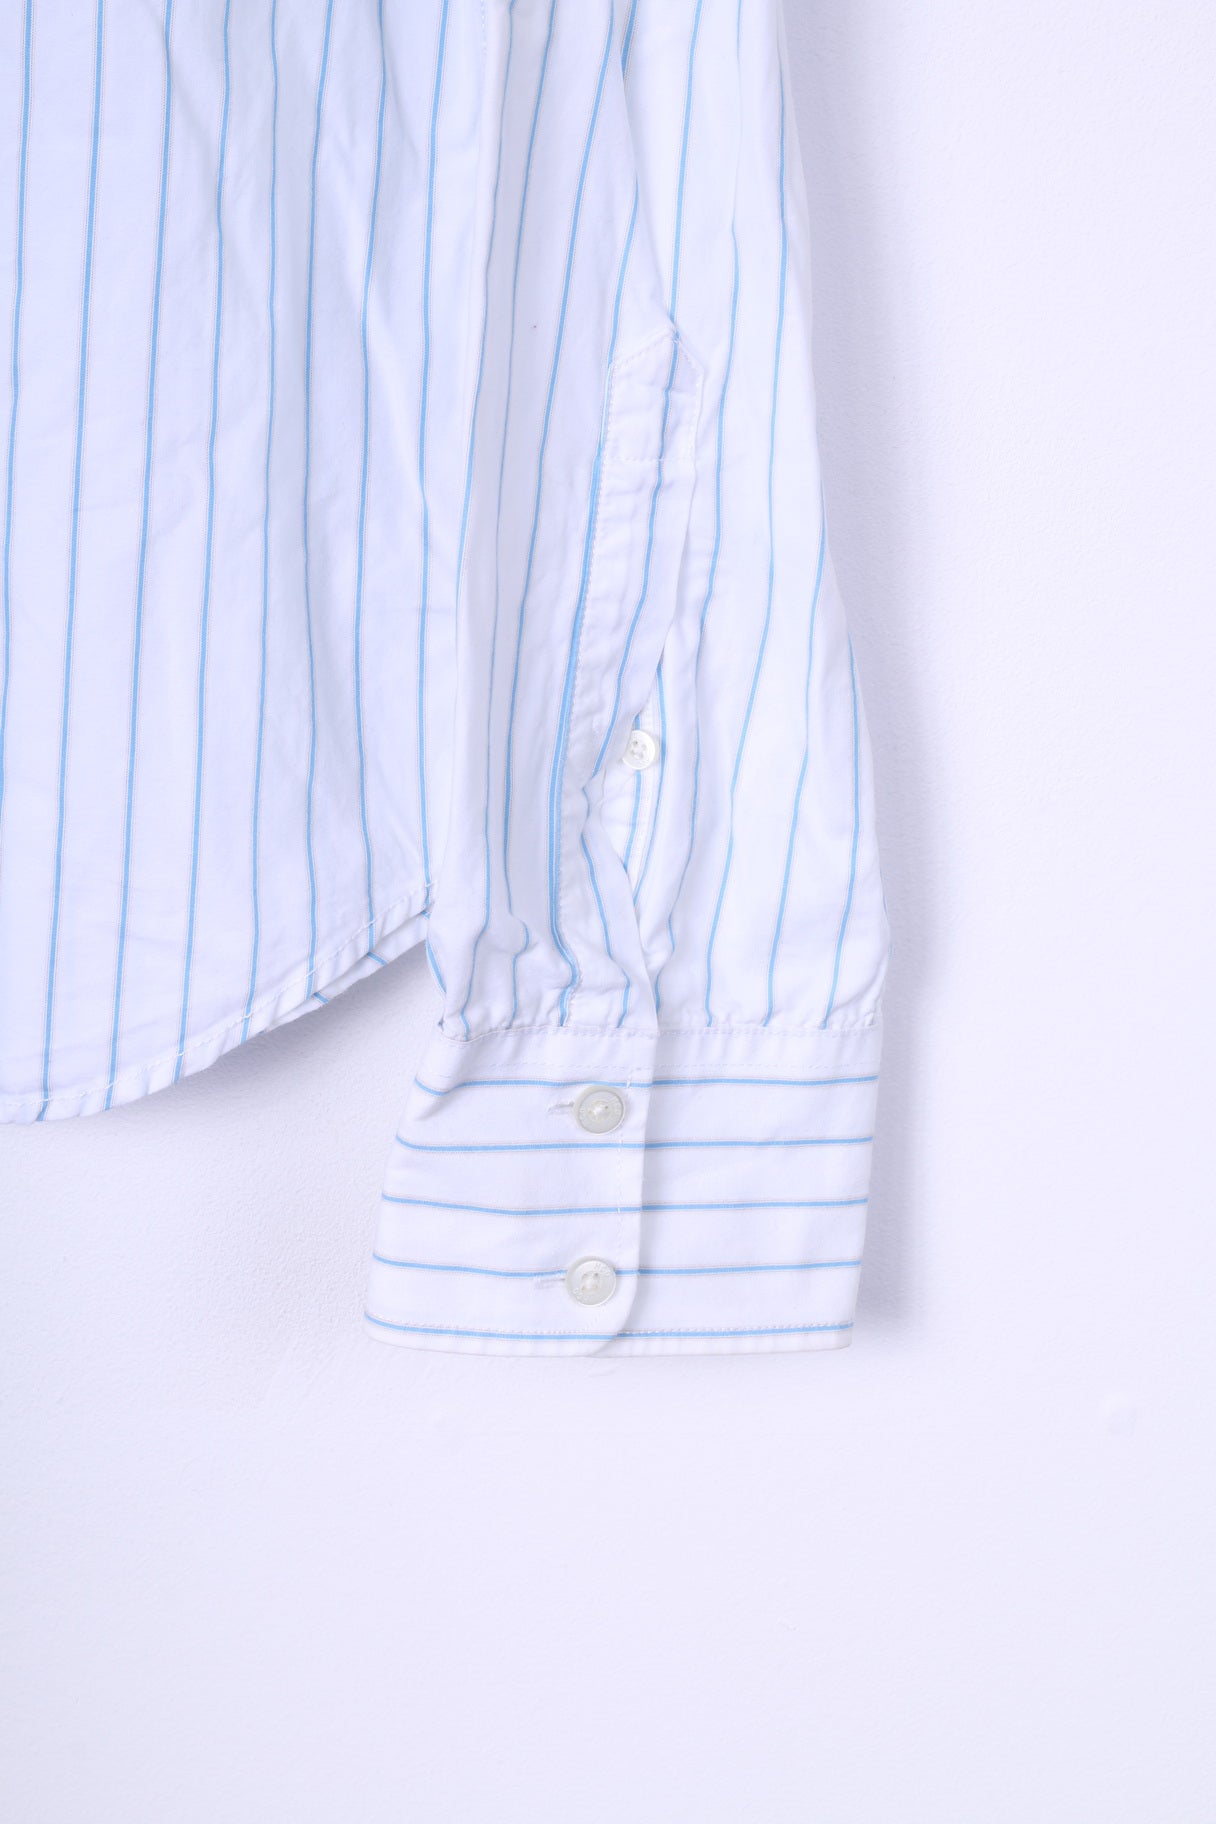 Hollister California Mens XL Casual Shirt Striped White Long Sleeve Cotton Top